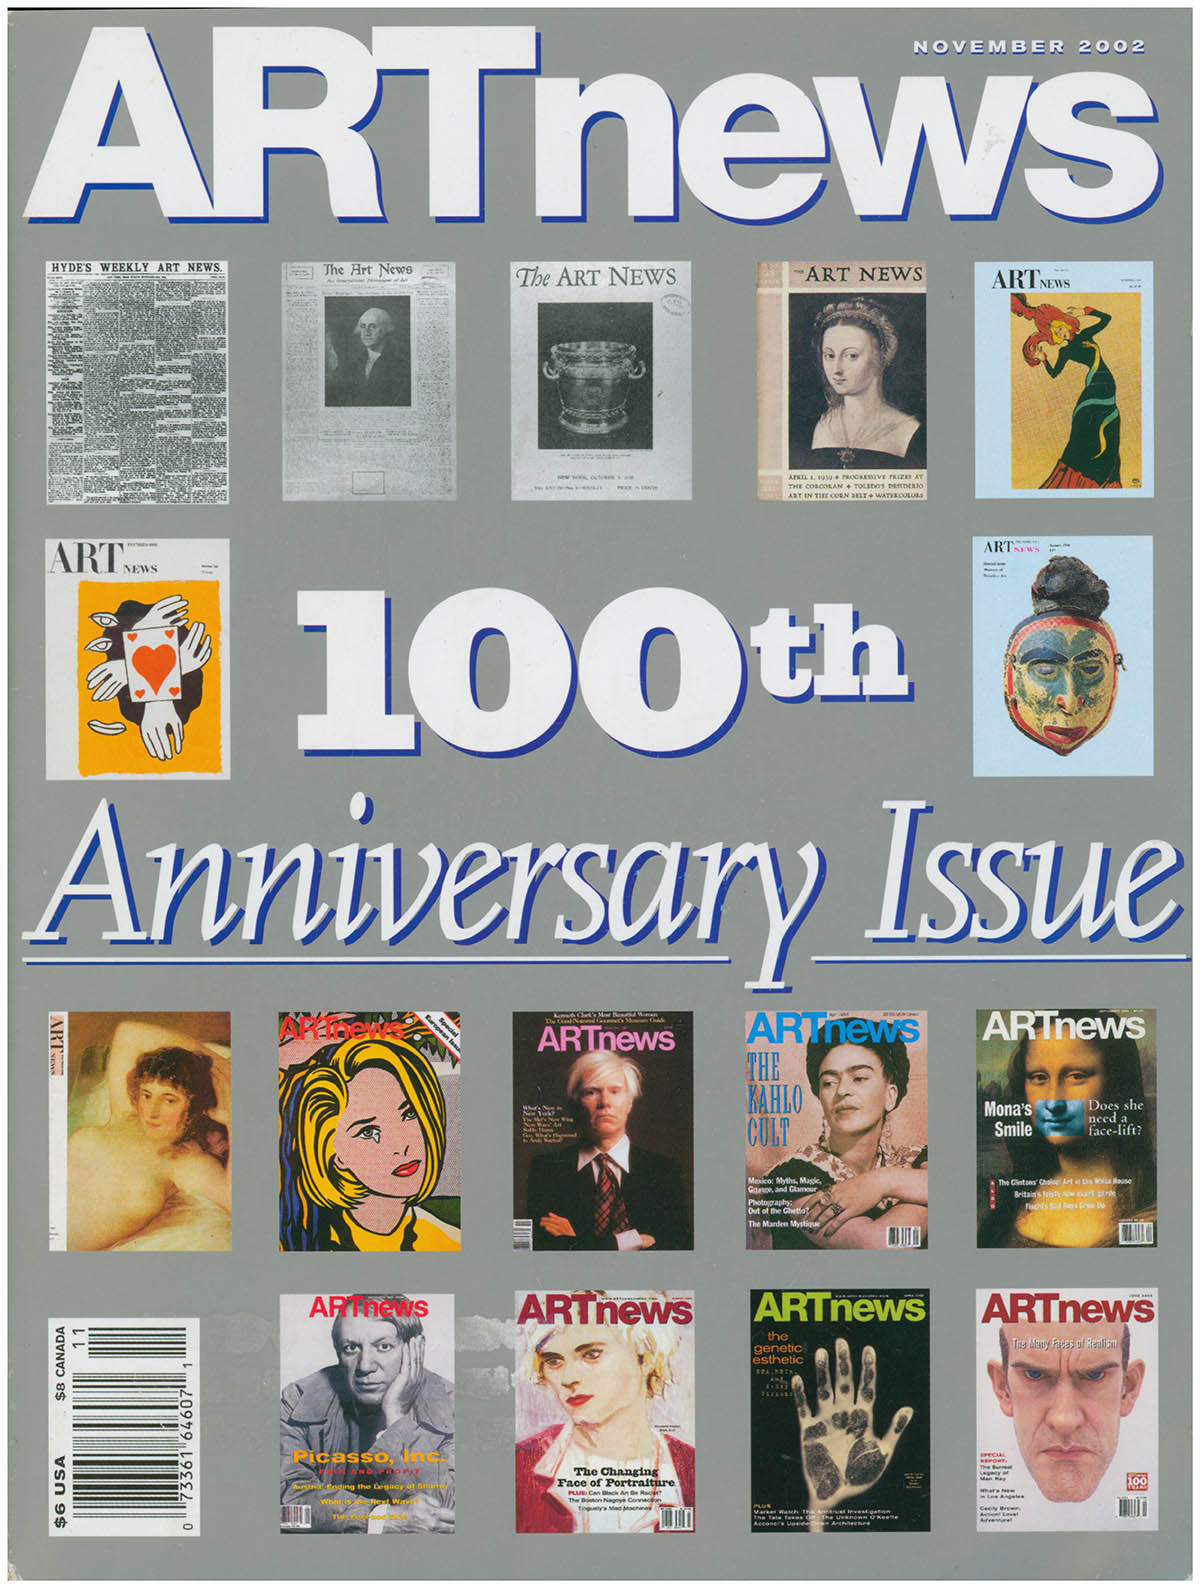 ArtNews - Artnews: 100th Anniversary Issue (Vol 101, November 2002)